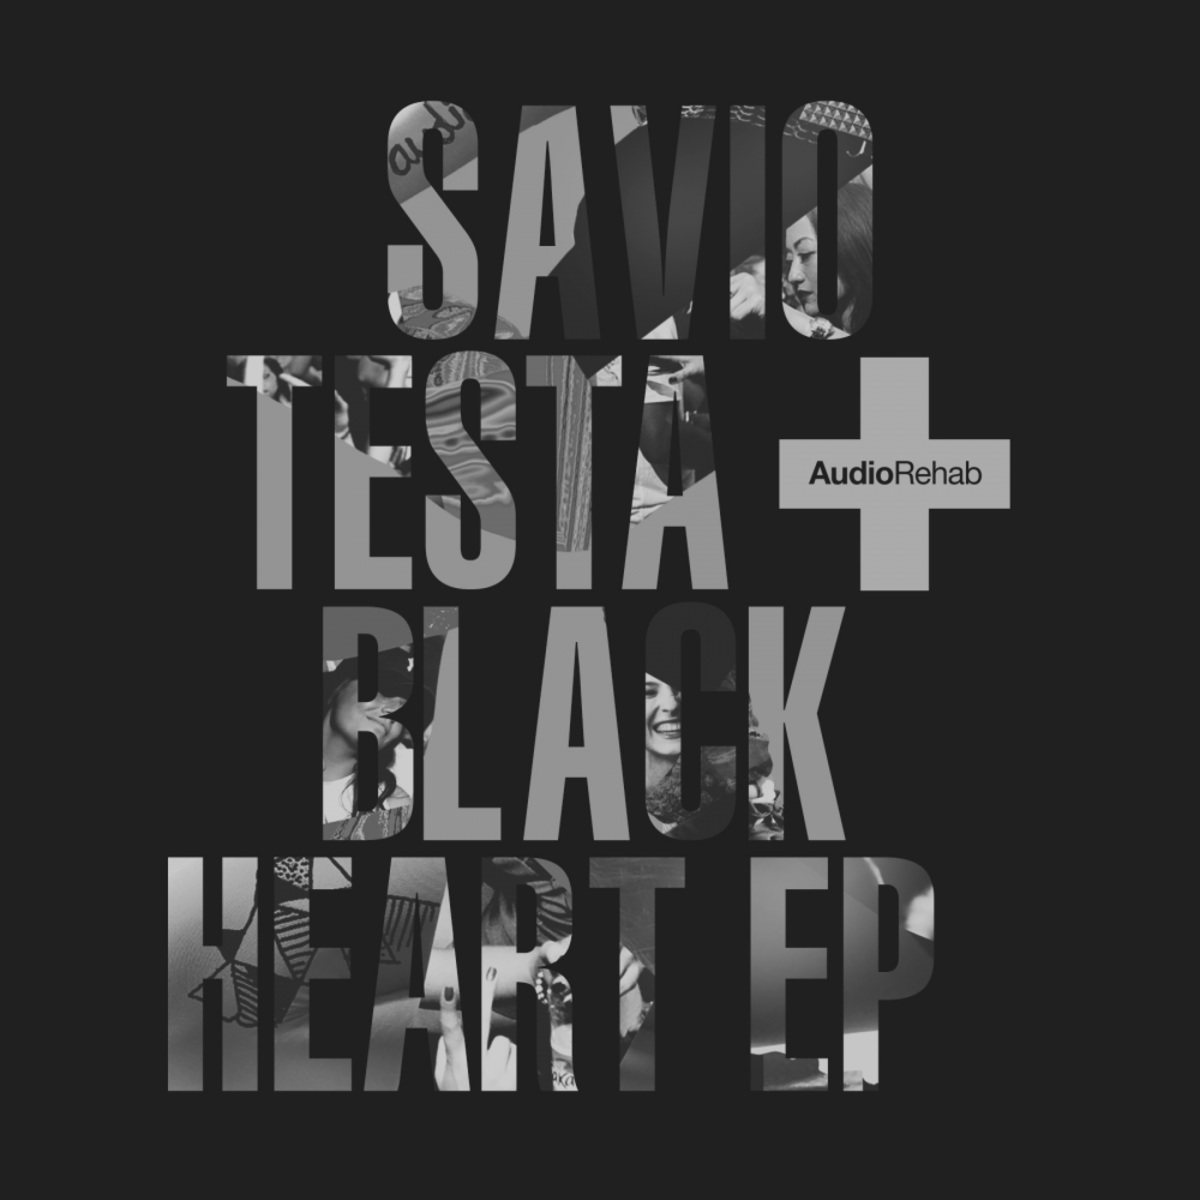 Savio Testa - Black Heart EP / Audio Rehab